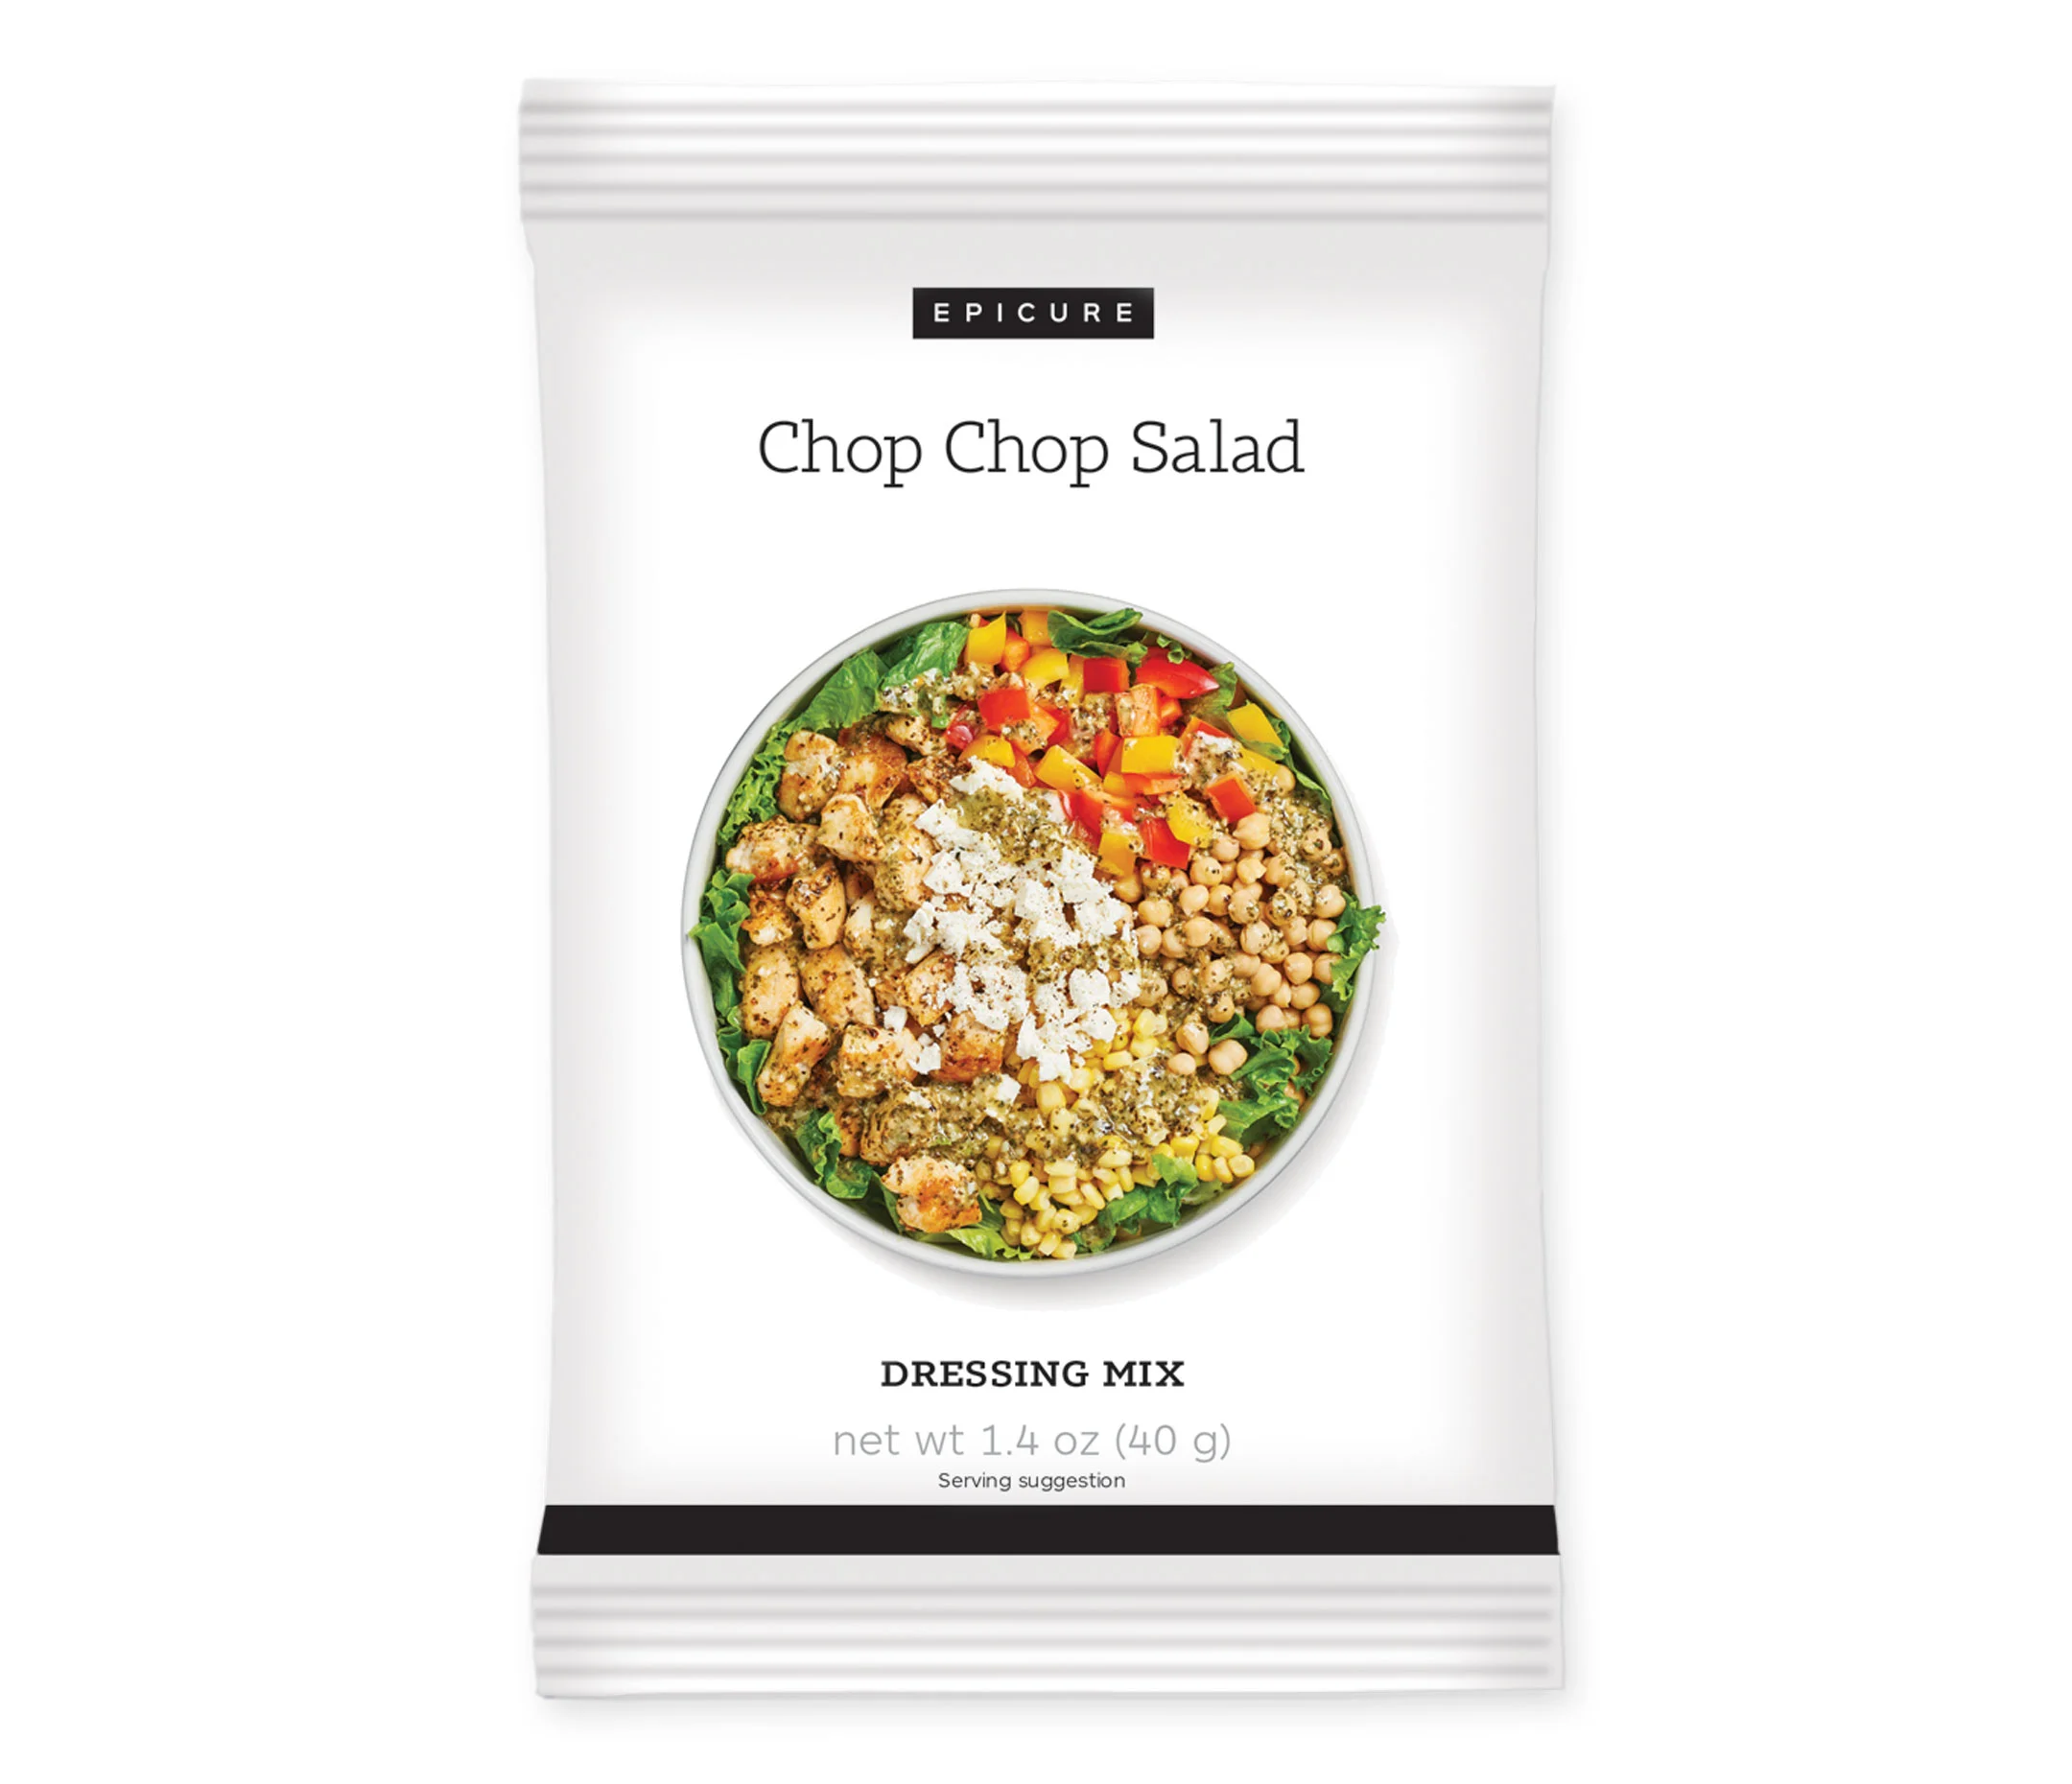 Chop Chop Salad Dressing Mix (Pkg of 3)